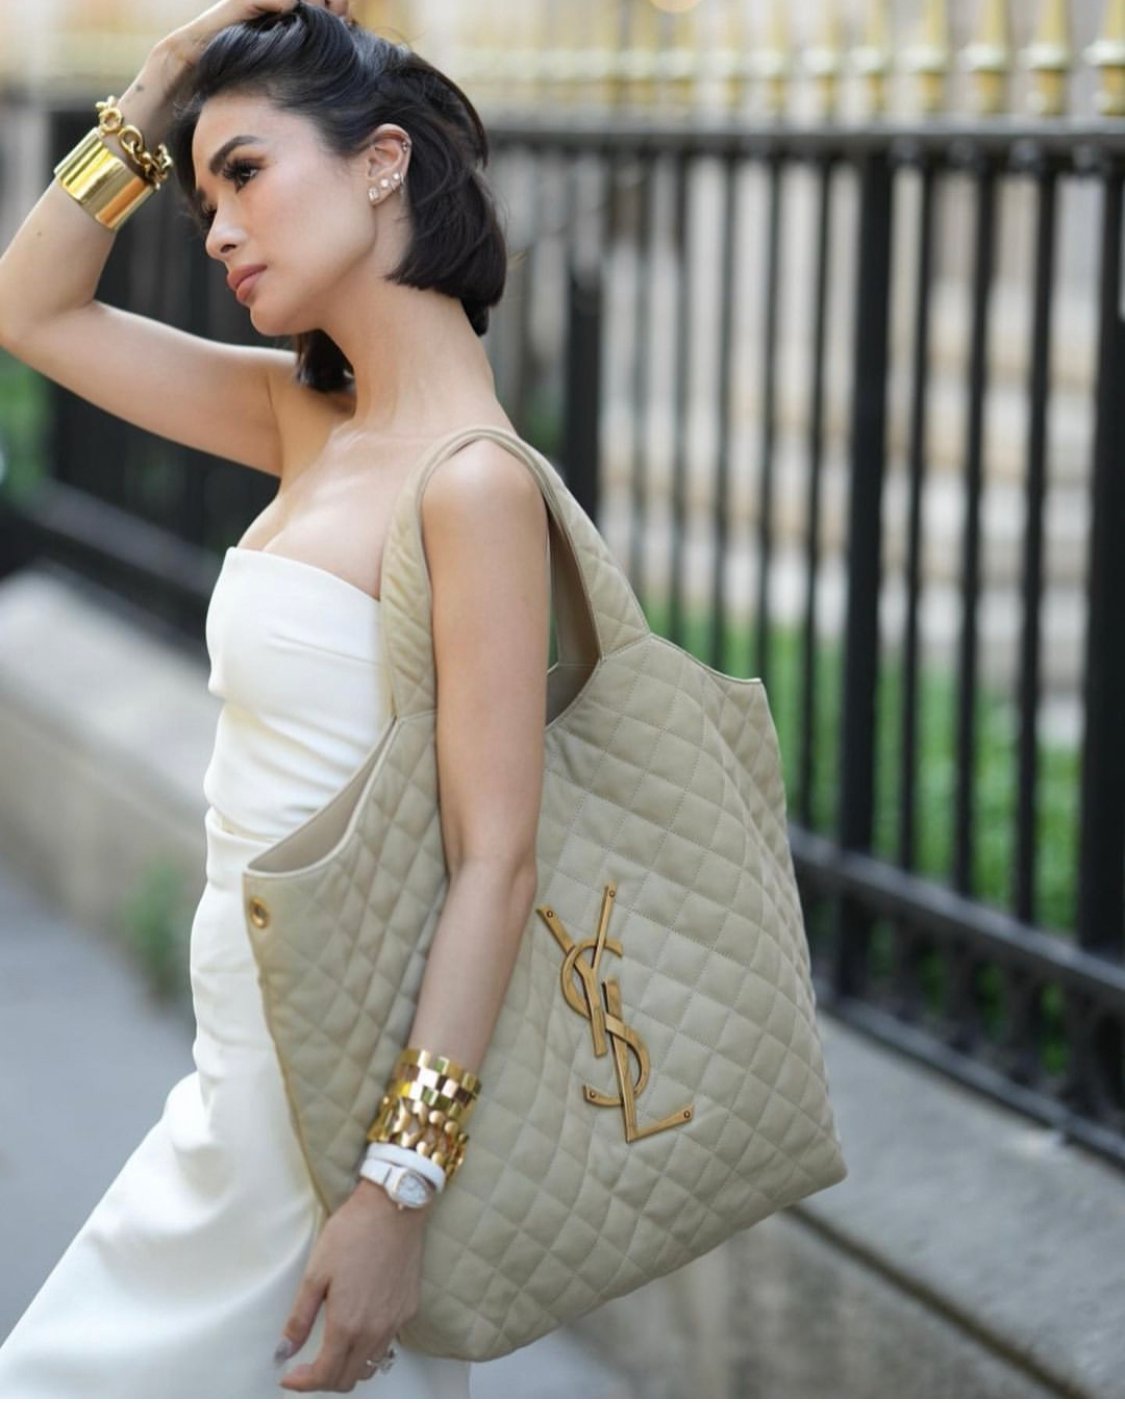 SAINT LAURENT ICARE MAXI SHOPPING BAG REVIEW #saintlaurent #handbag  #fashion 